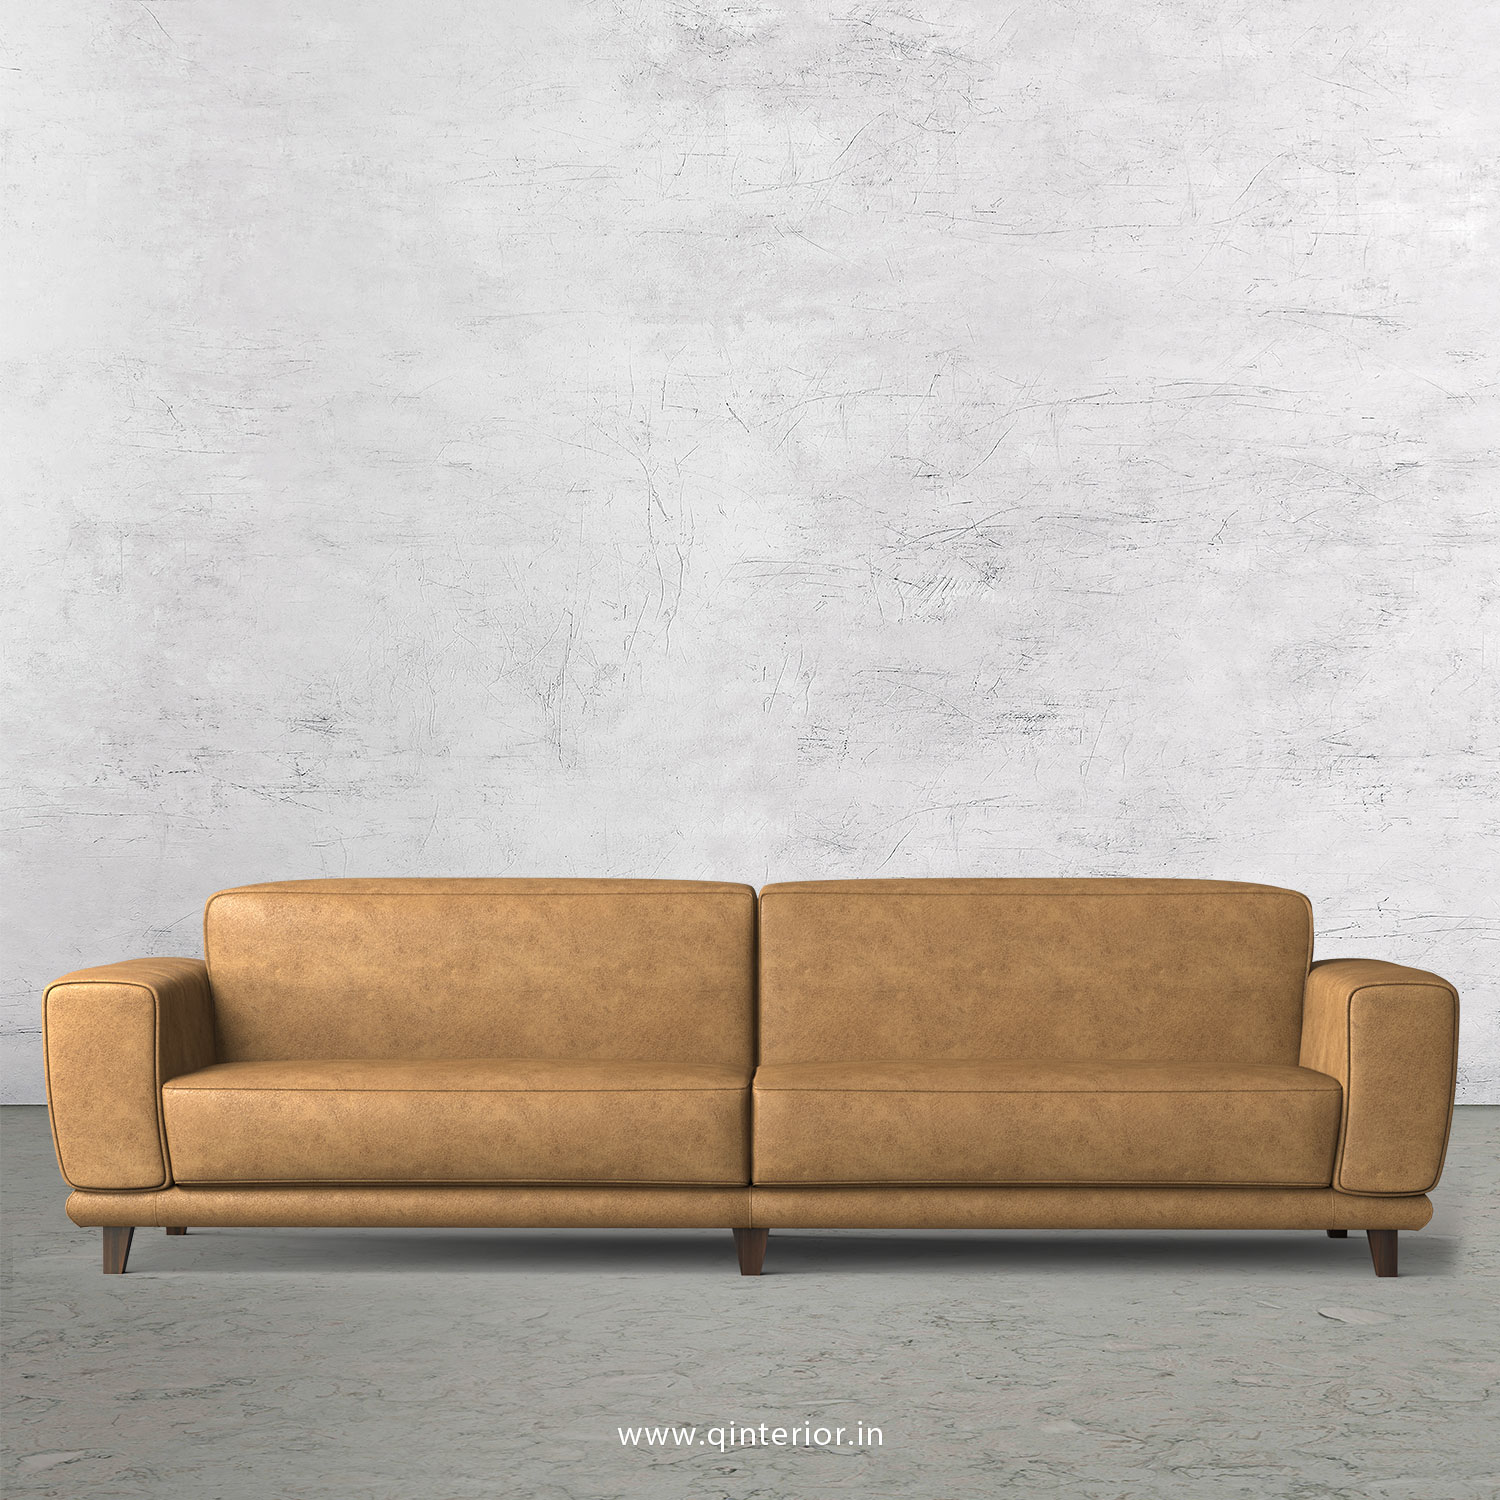 Avana 4 Seater Sofa in Fab Leather Fabric - SFA008 FL02 in Wooden Brown ...